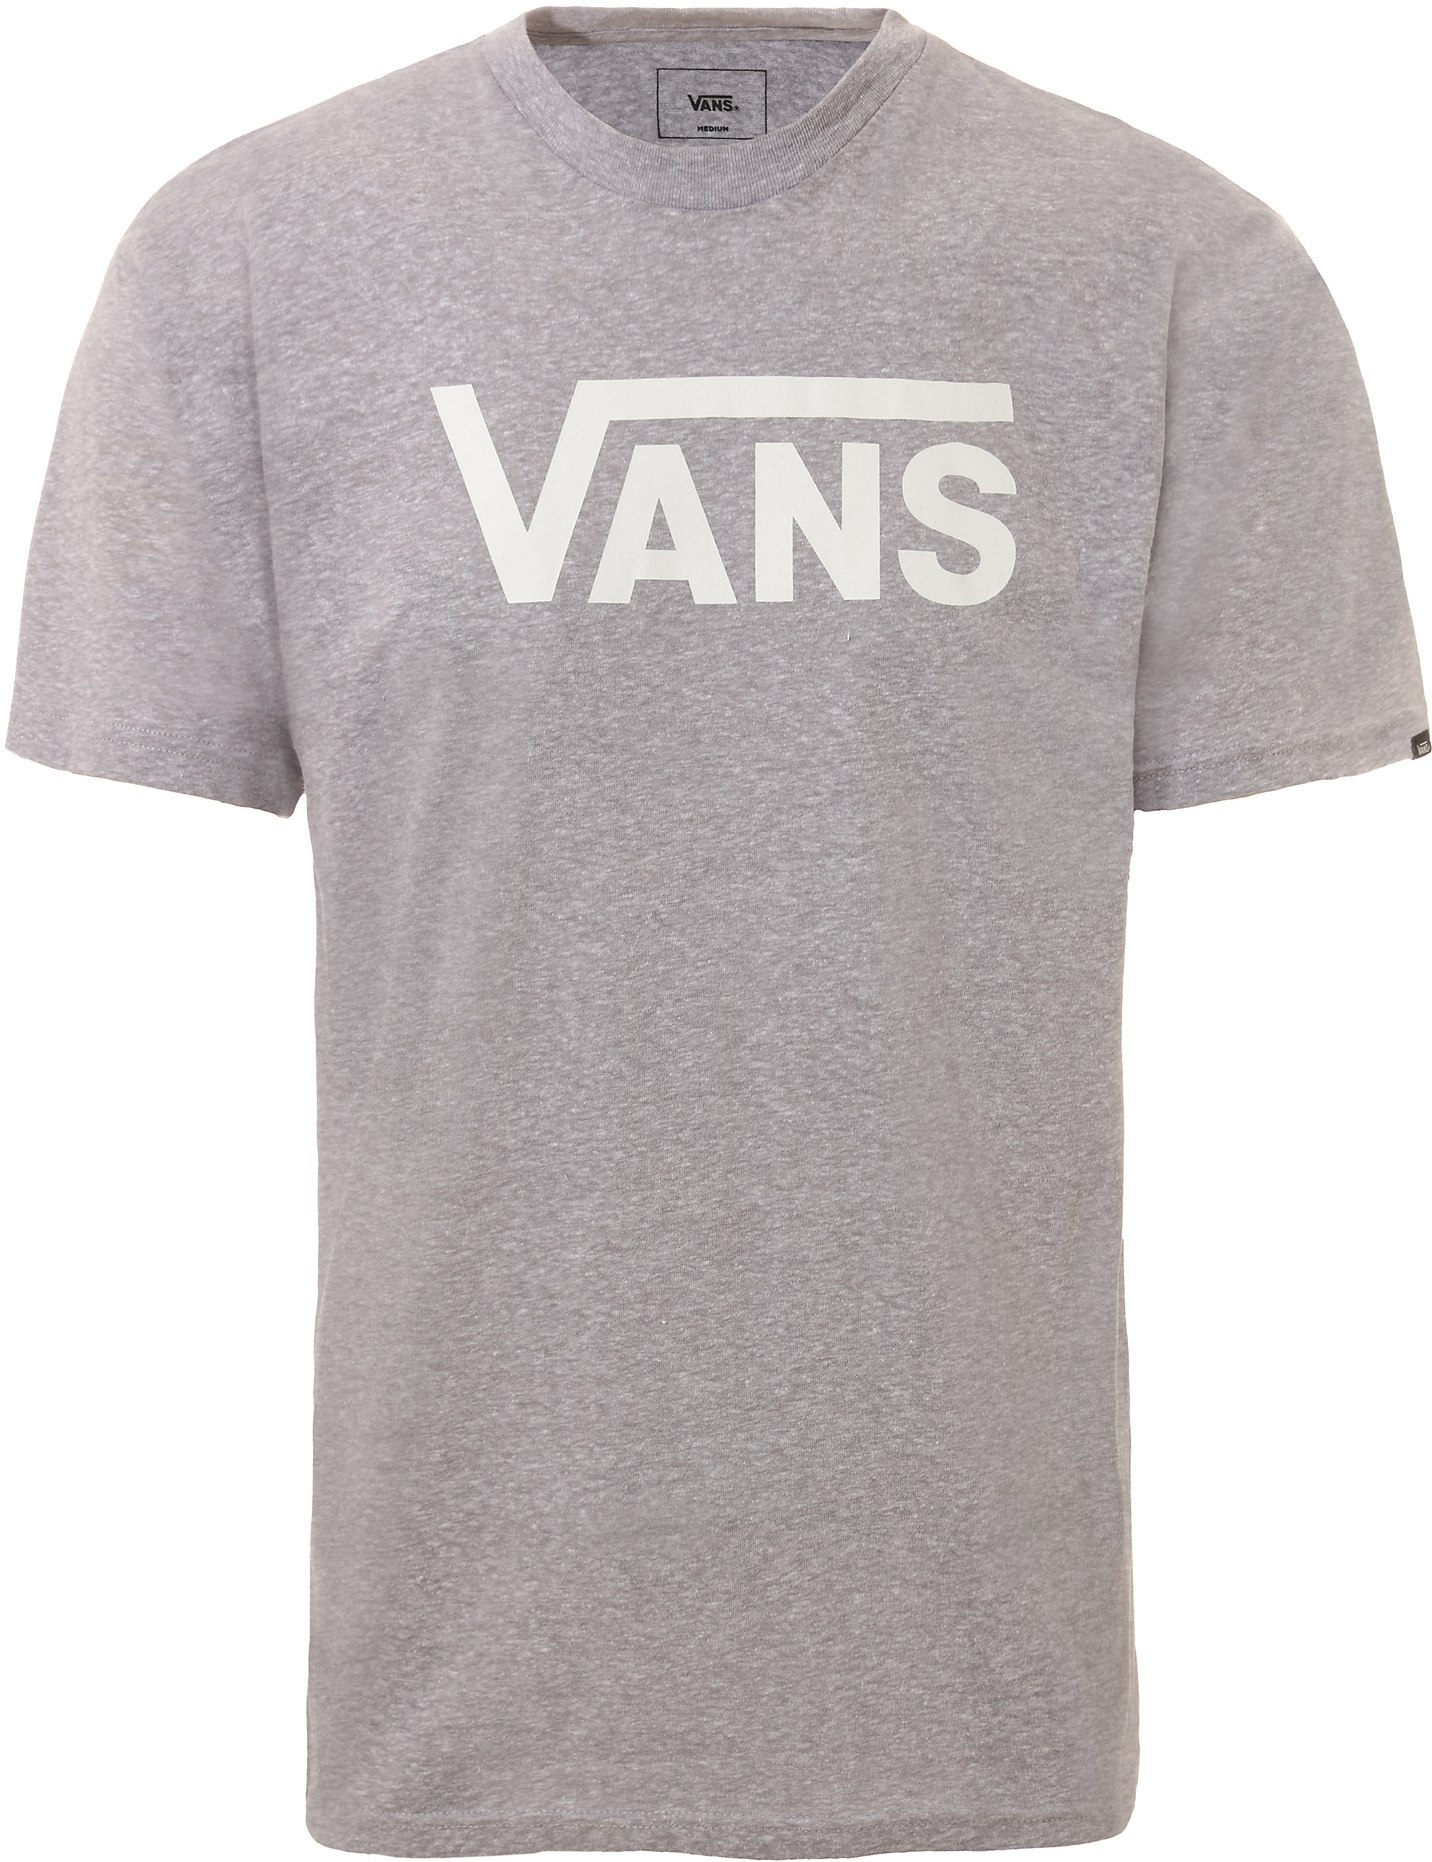 vans grey shirt